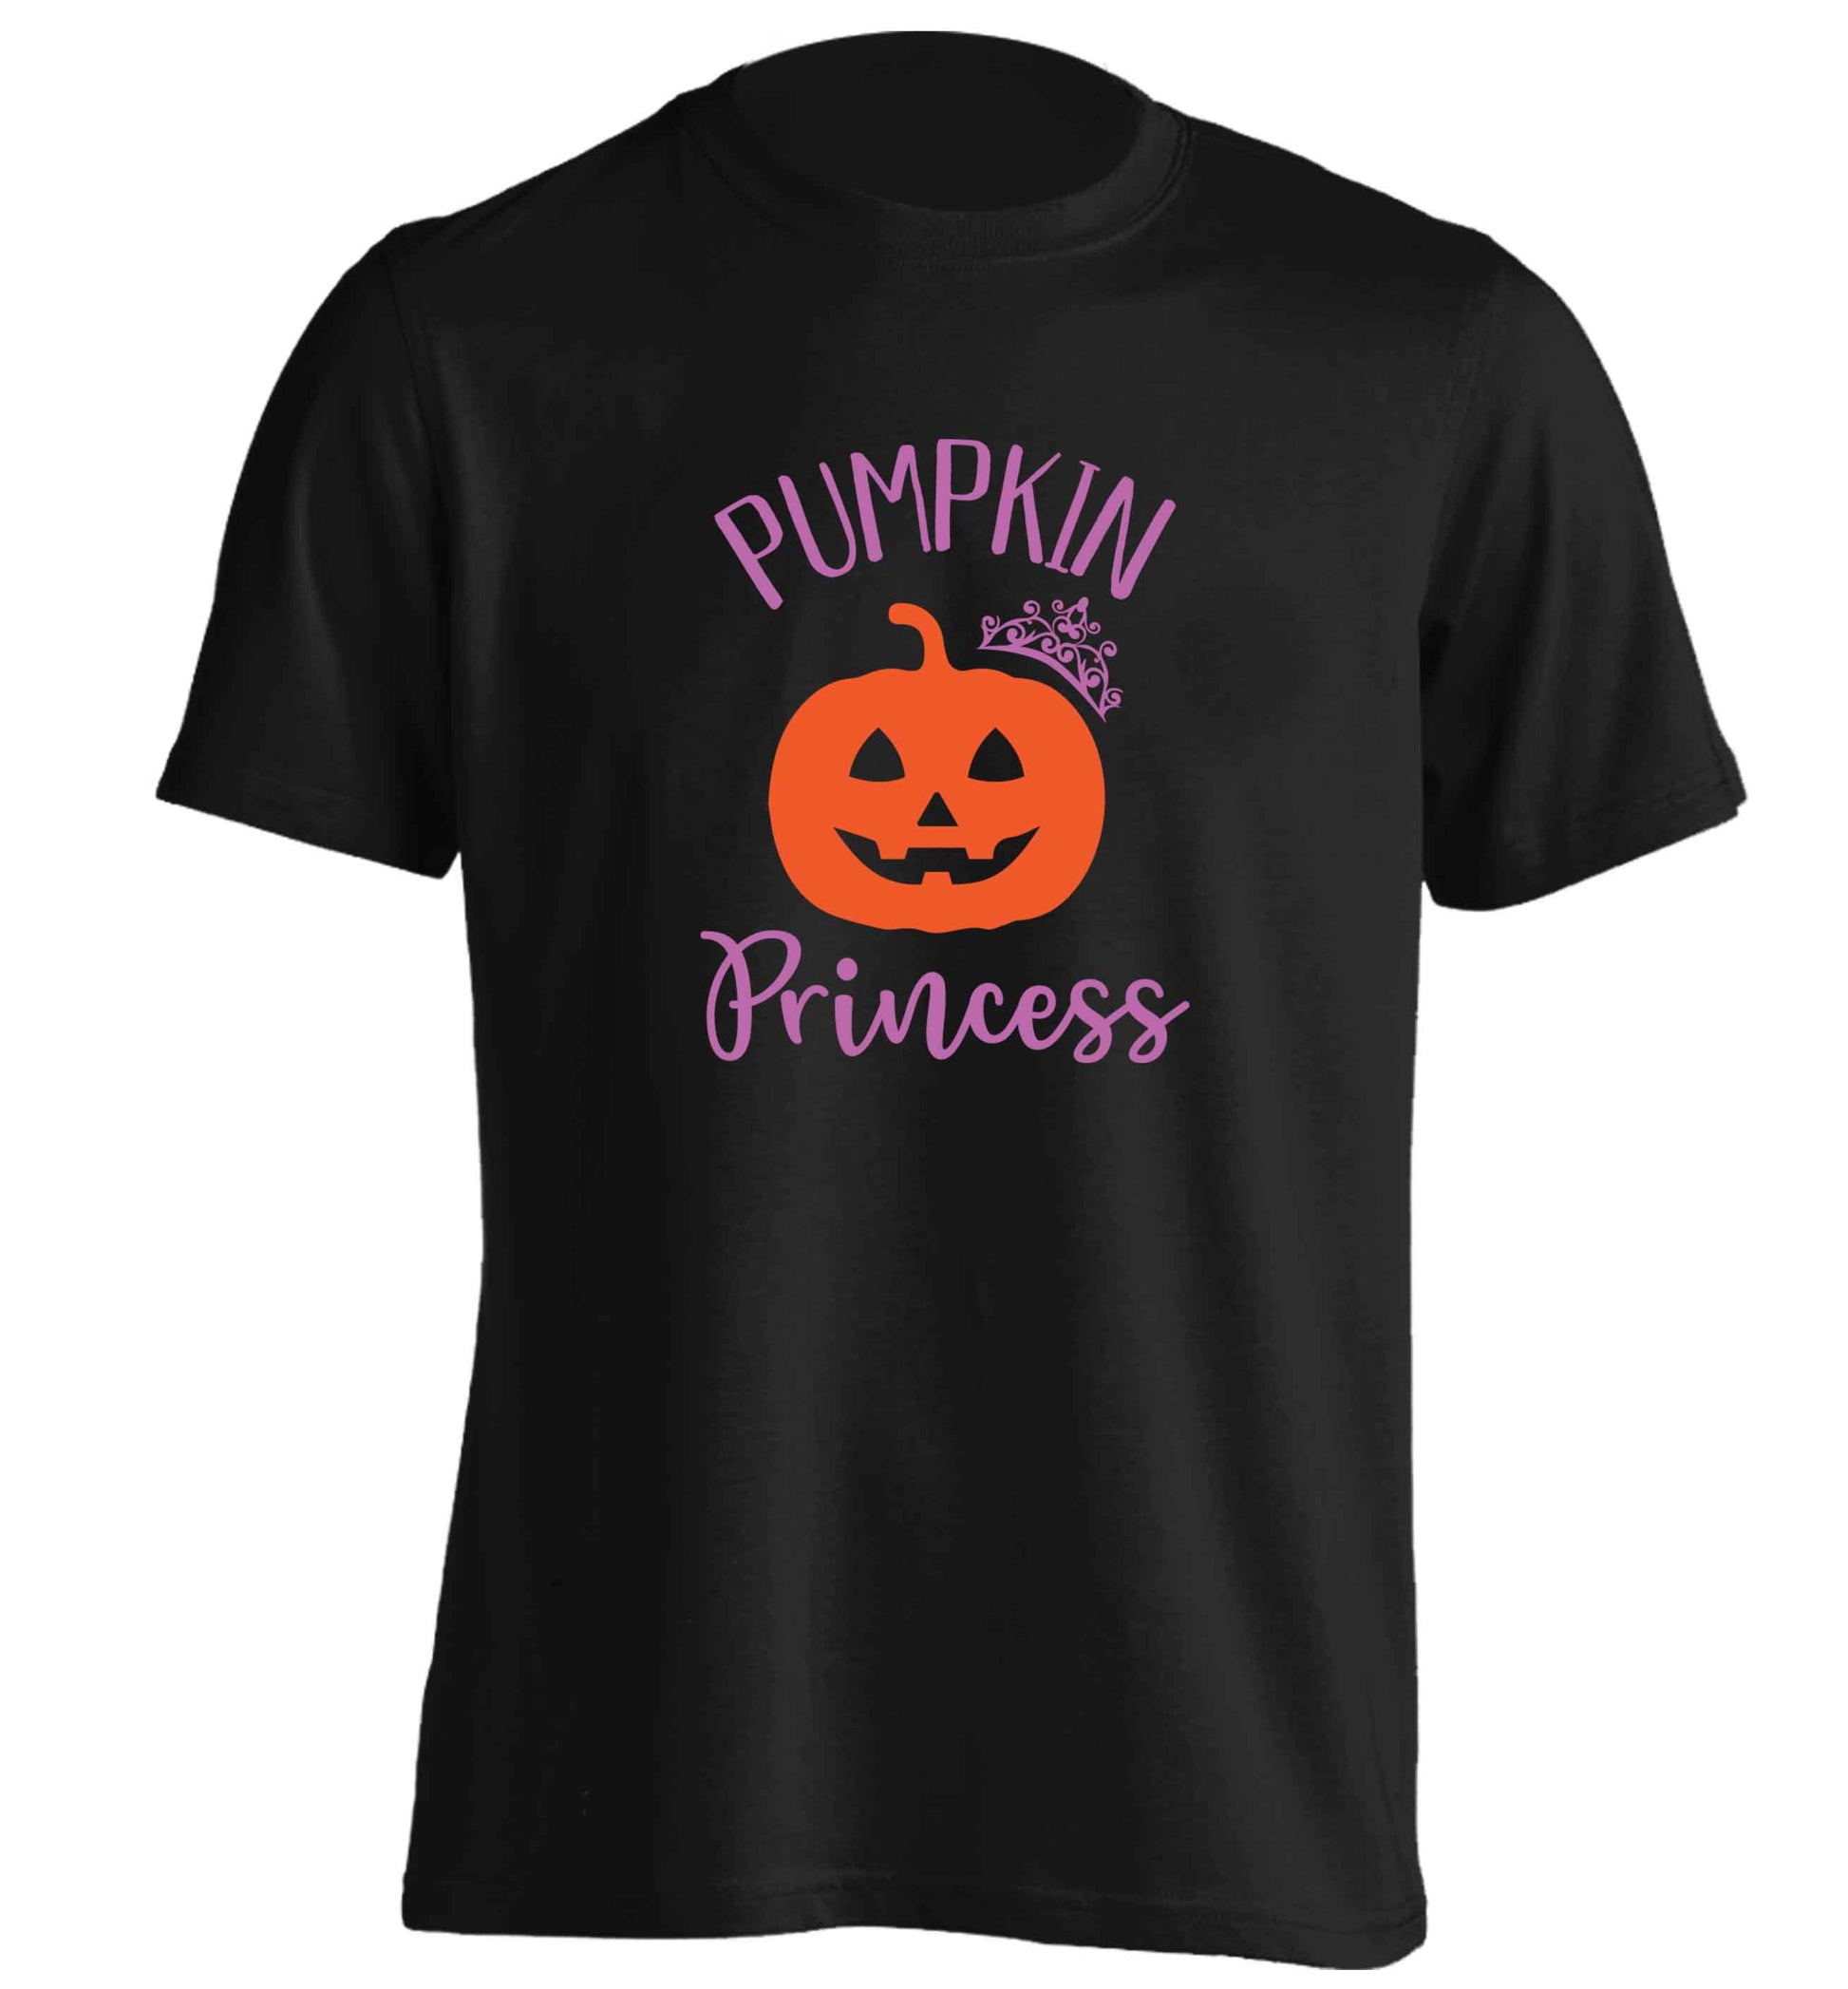 Happiness Pumpkin Spice adults unisex black Tshirt 2XL